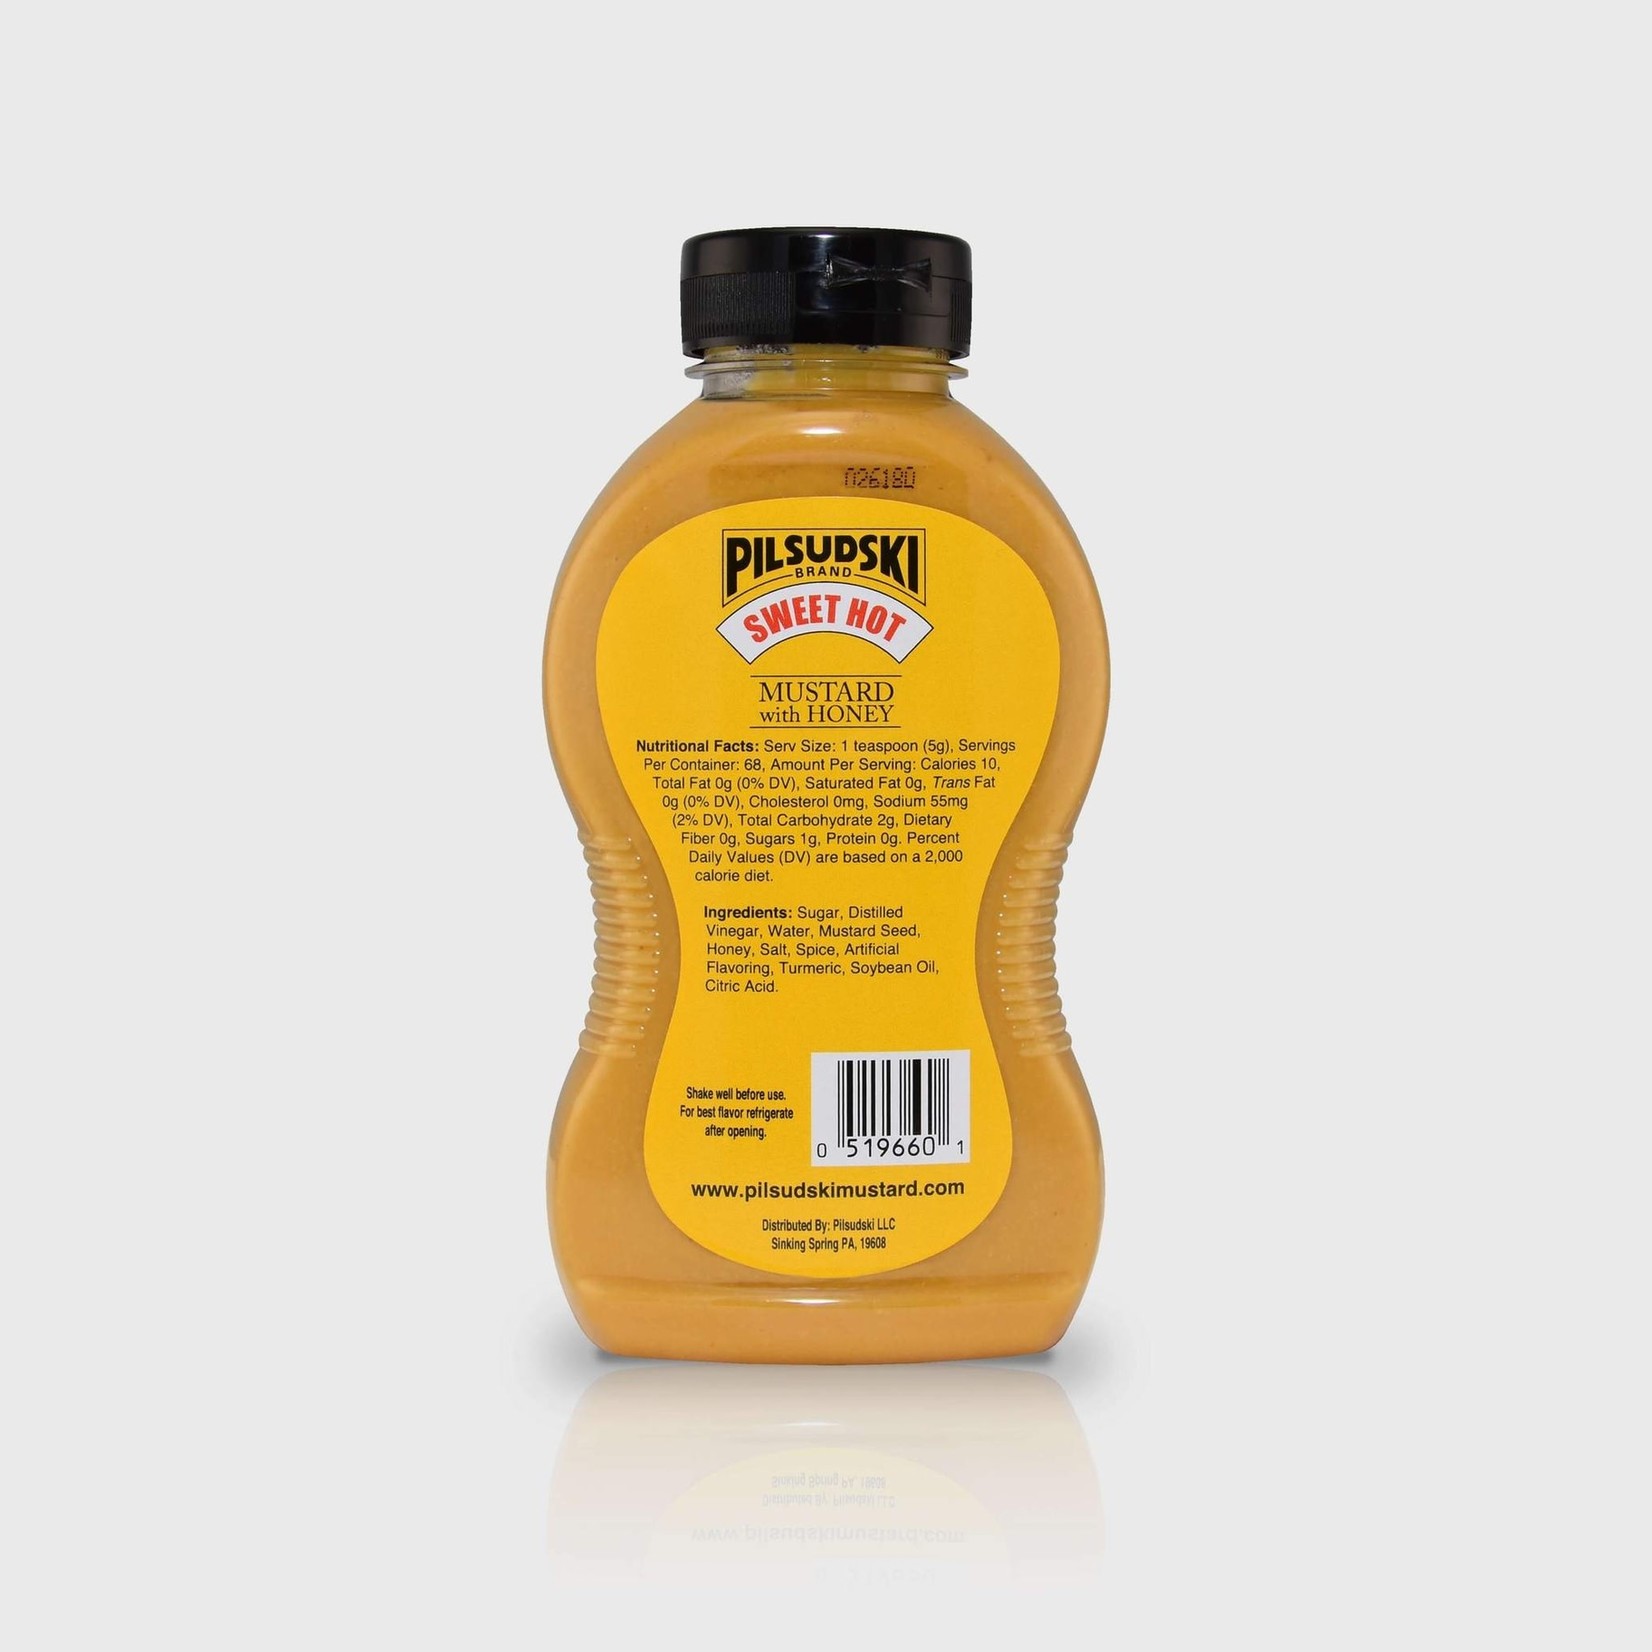 Pilsudski Mustard Co Sweet Hot Mustard with Honey 12 oz